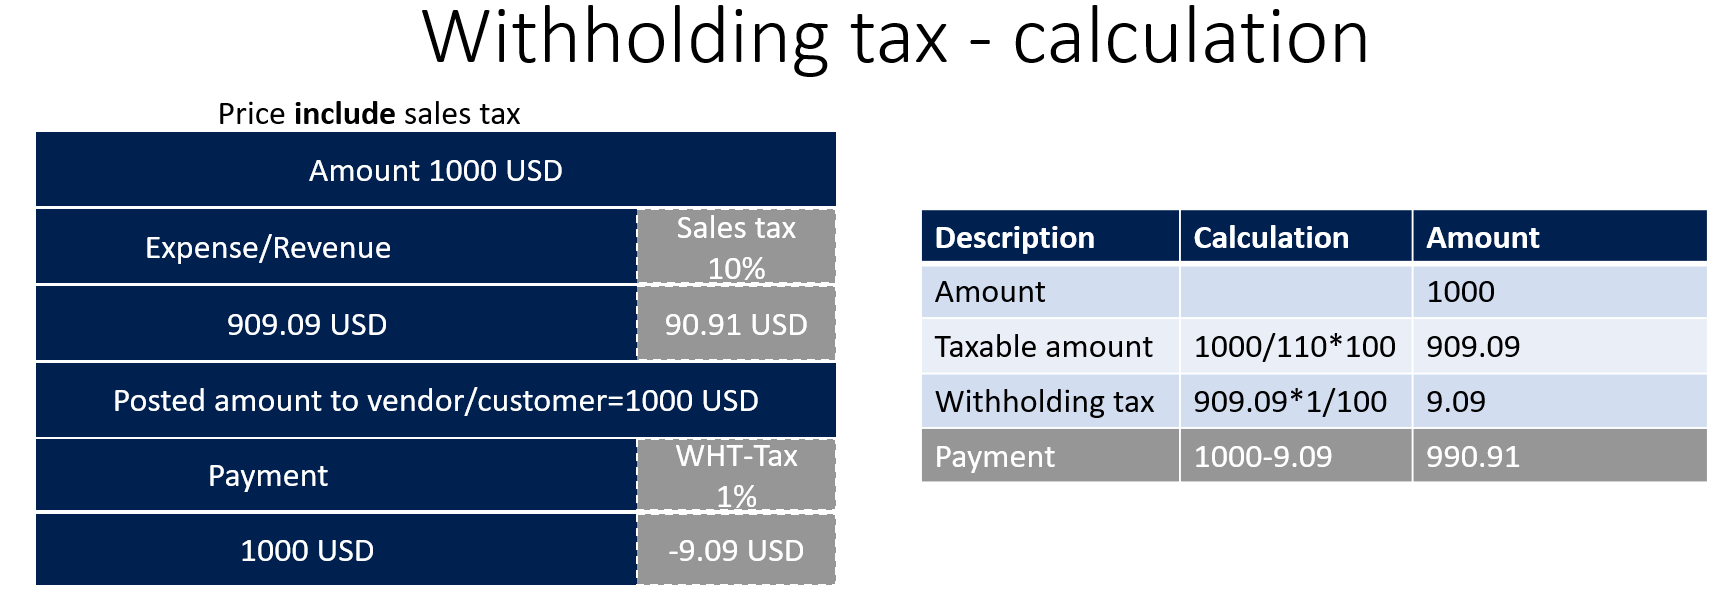 understanding-withholding-tax-microsoft-dynamics-365-enterprise